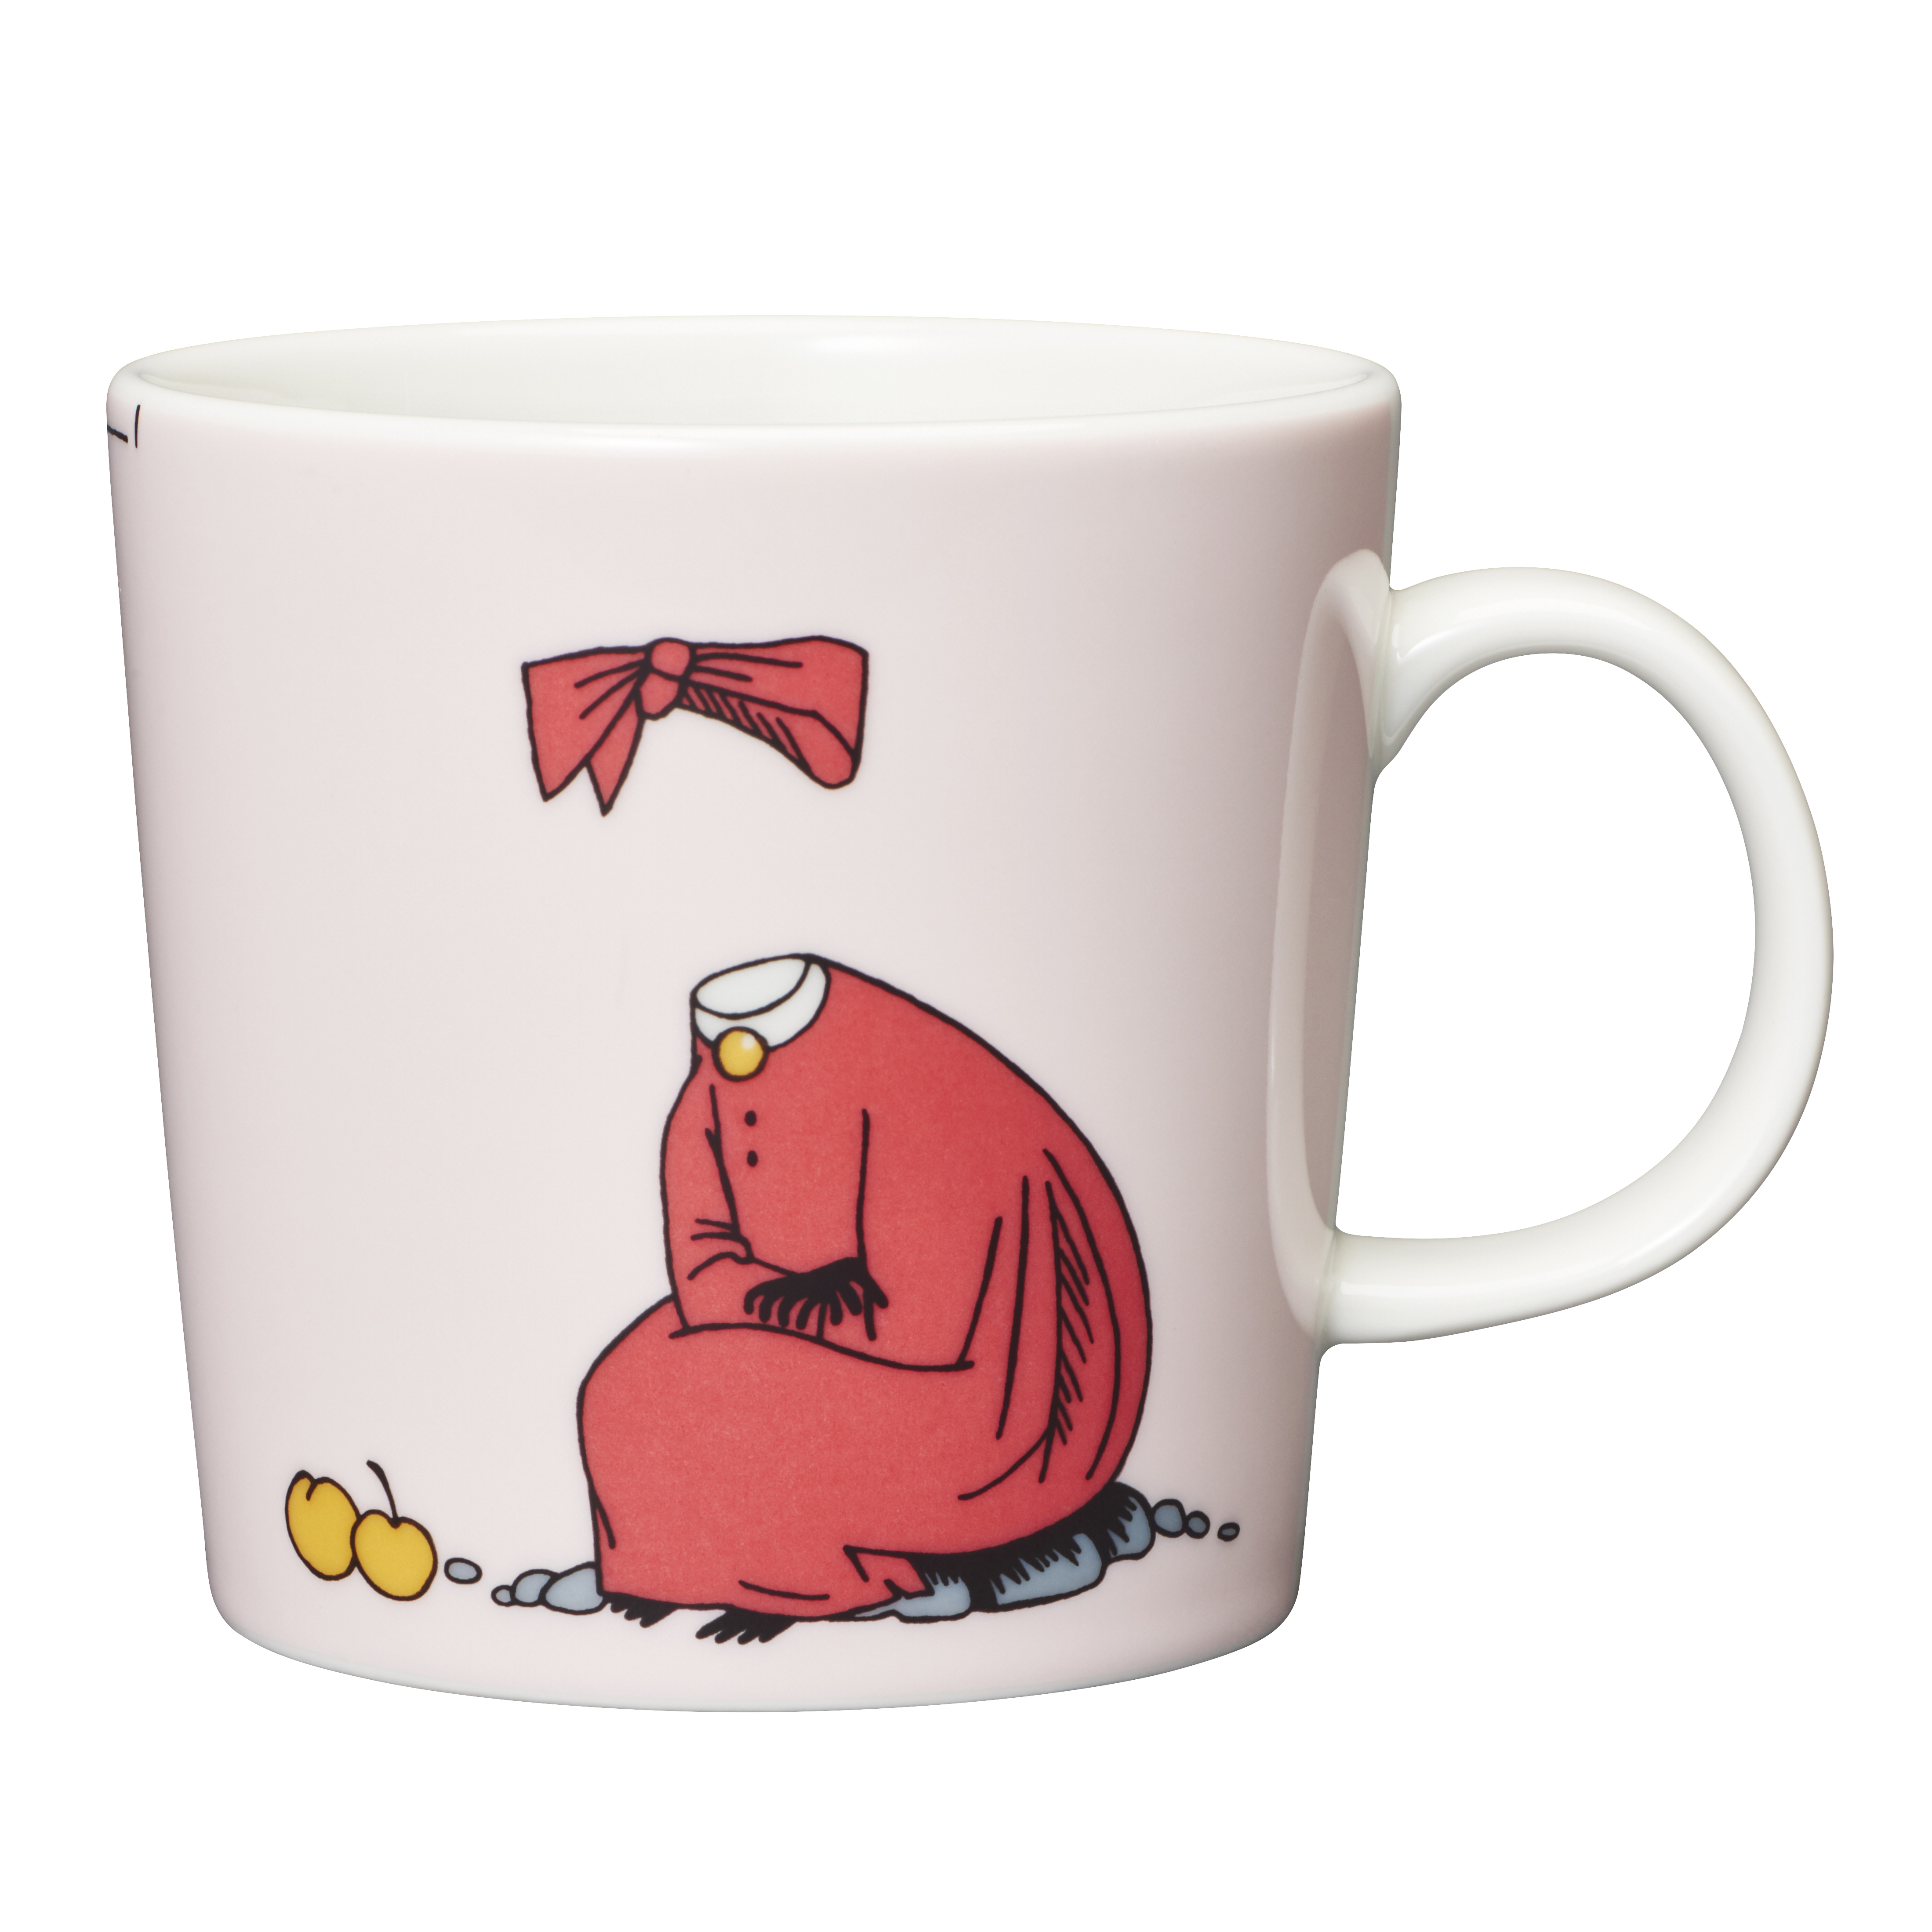 Moomin Mug Girls 250ml